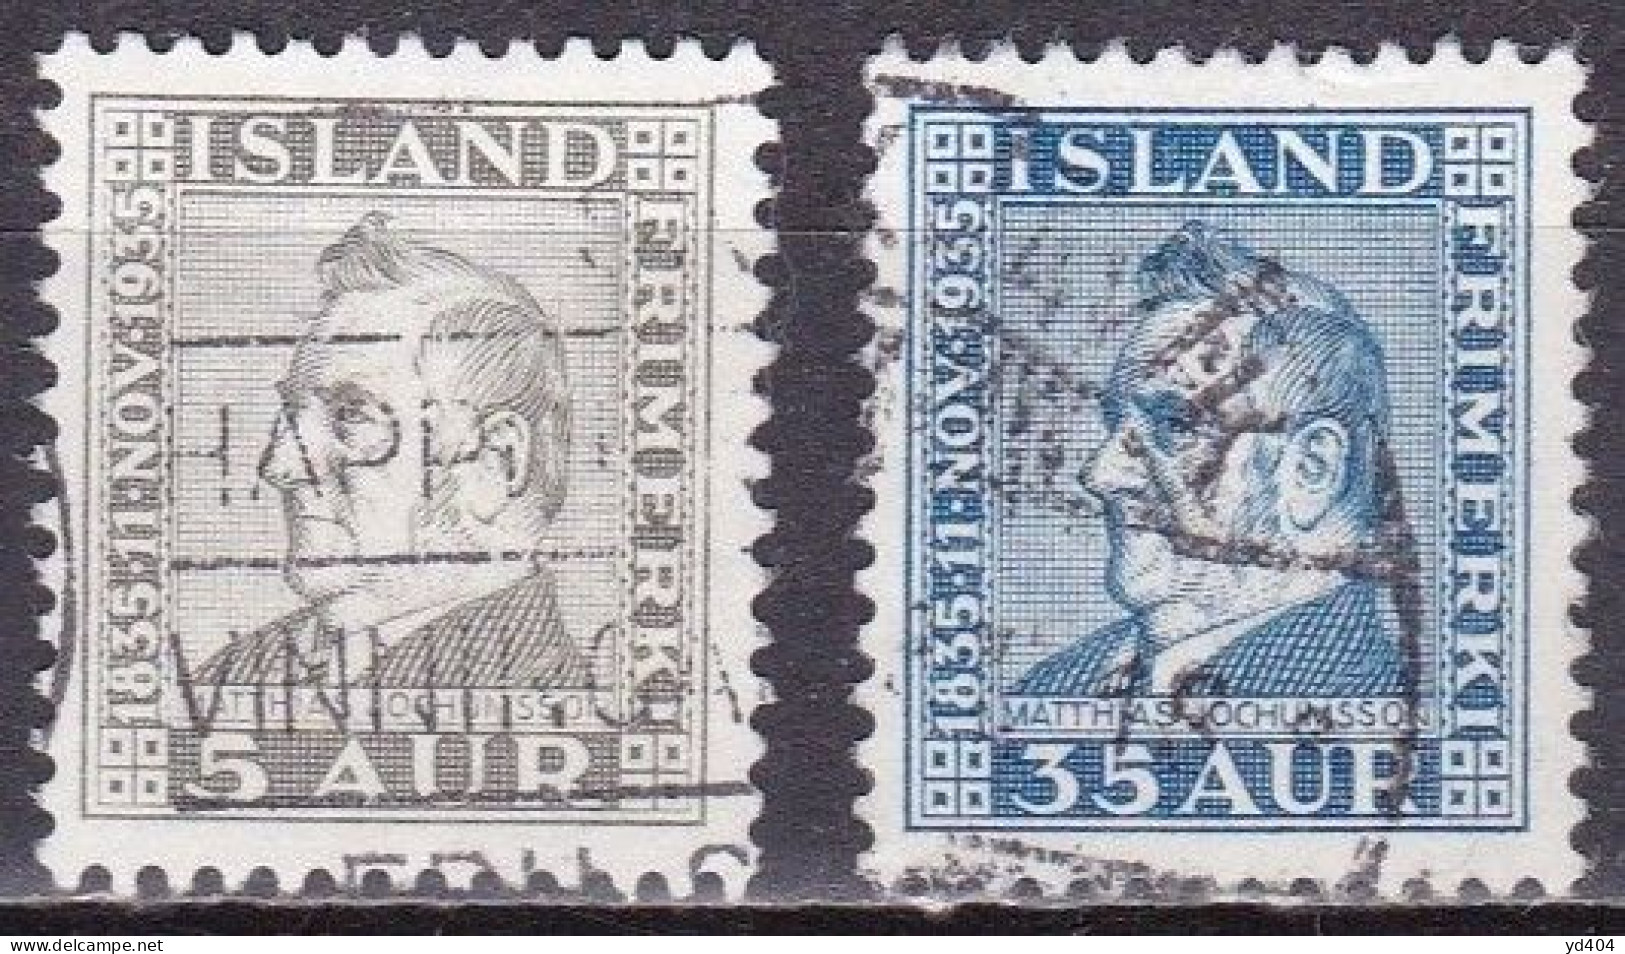 IS031B – ISLANDE – ICELAND – 1935 – MATHIAS JOCHUMSSON – SG # 217-219 USED - Usati